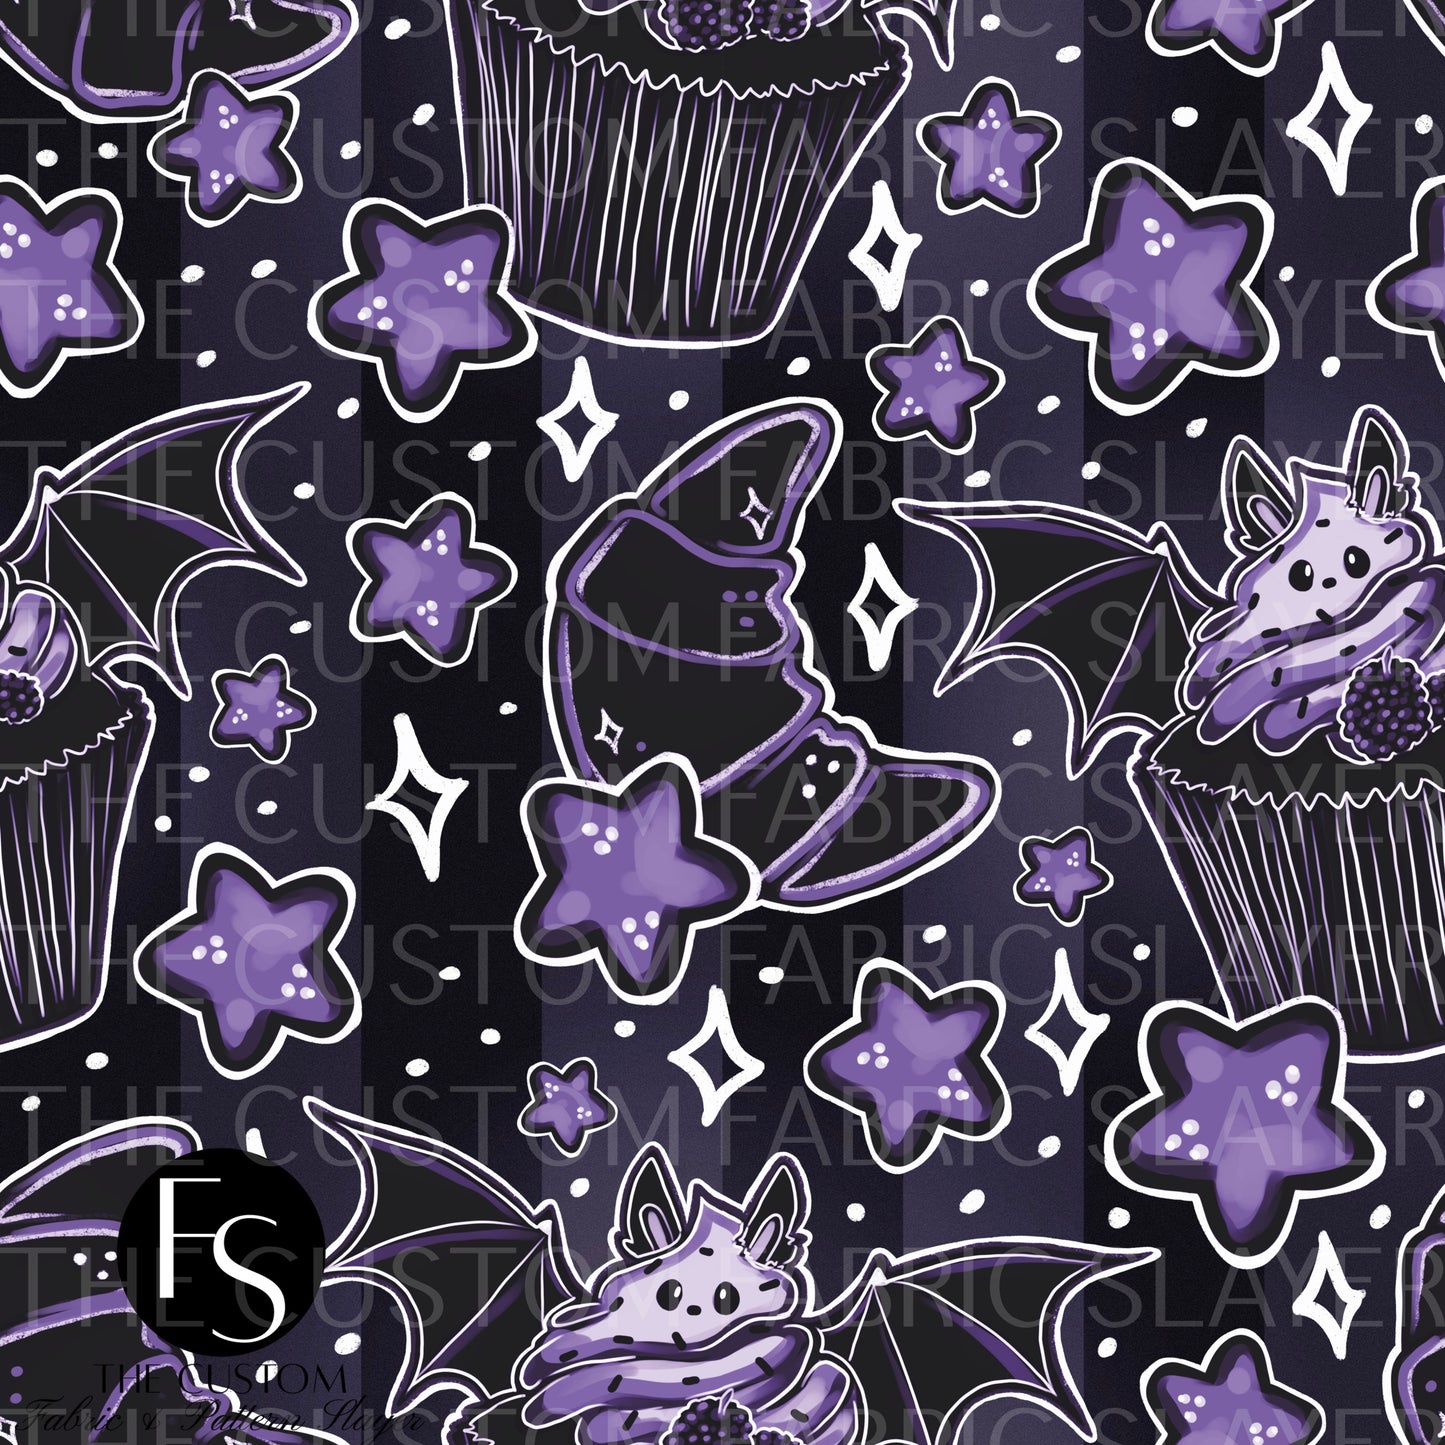 Bat Cupcakes C - HEXREJECT